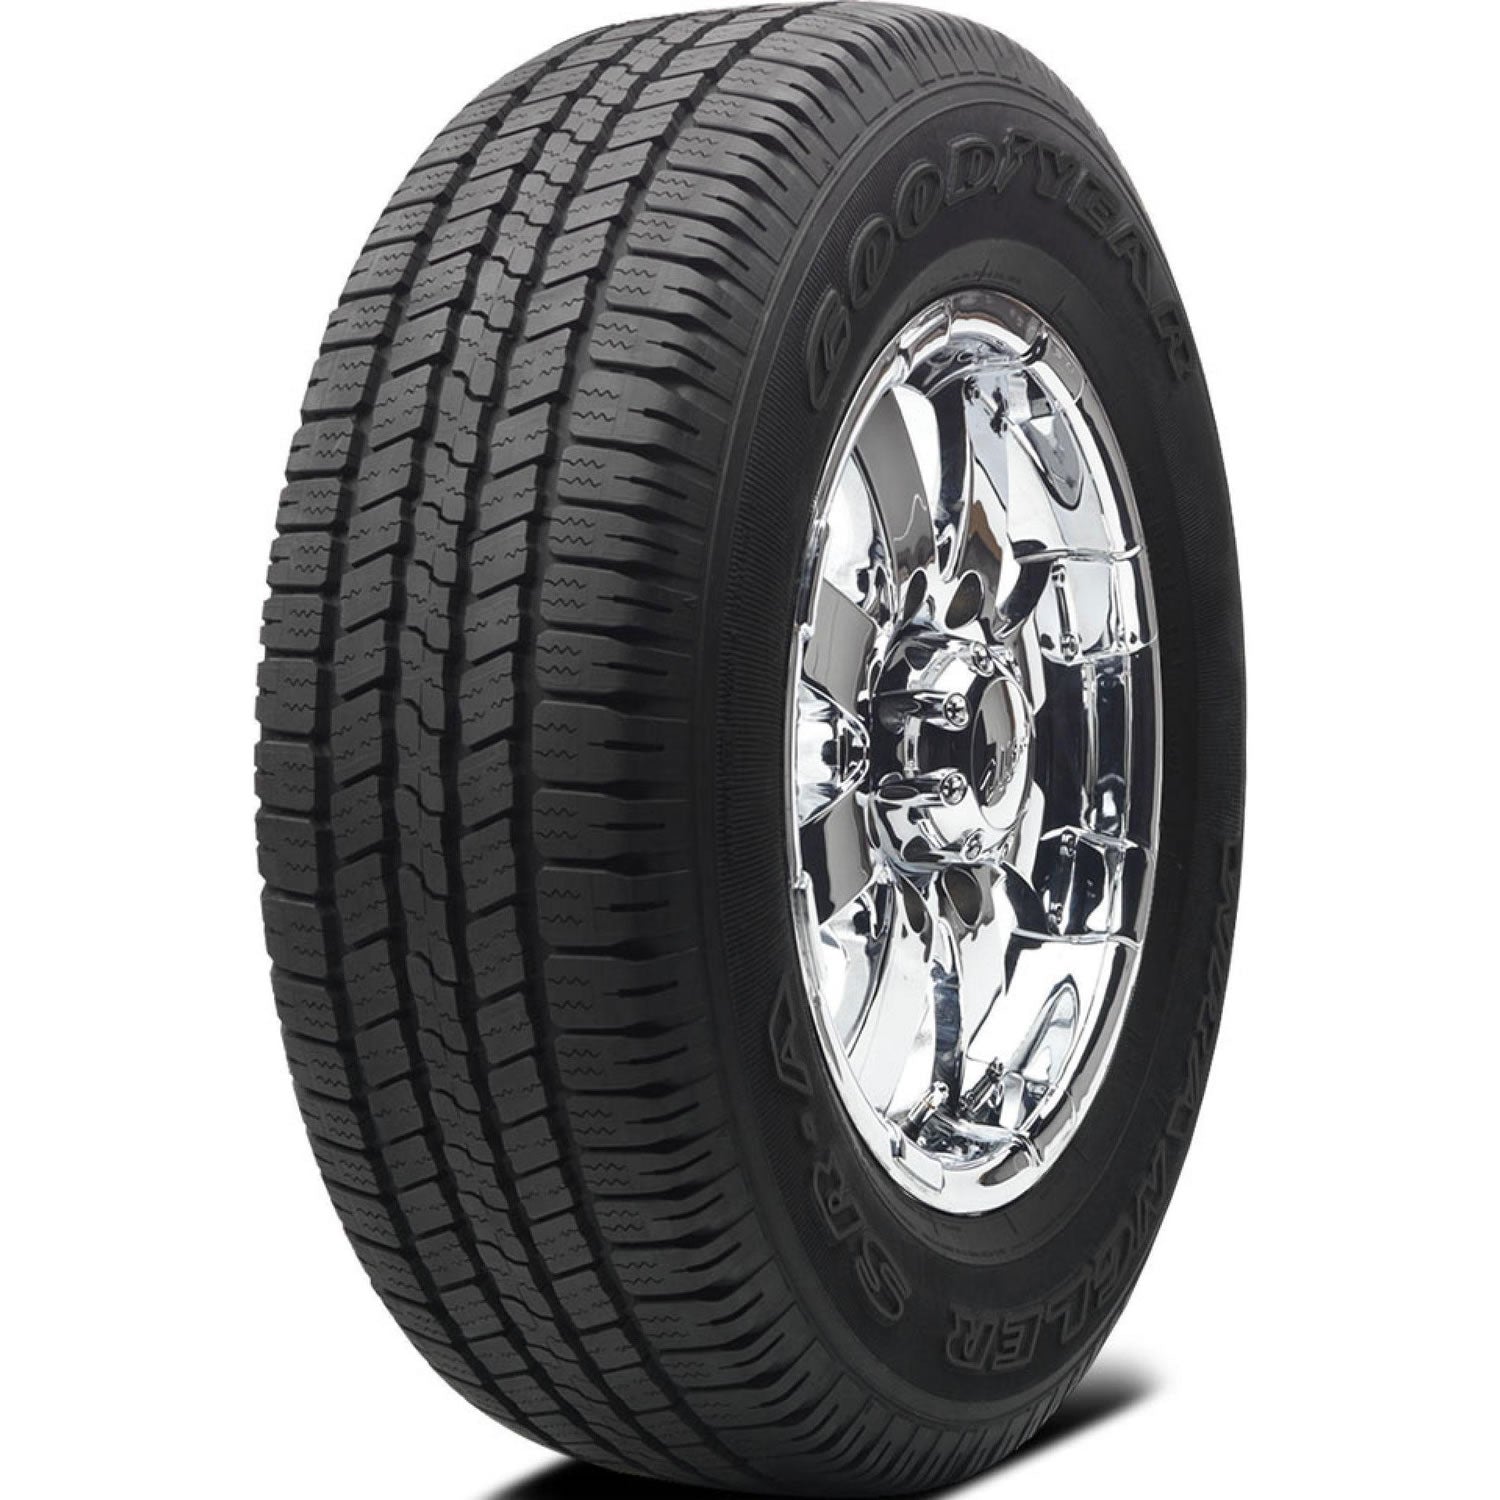 GOODYEAR WRANGLER SR-A P265/75R15 (30.7X10.5R 15) Tires